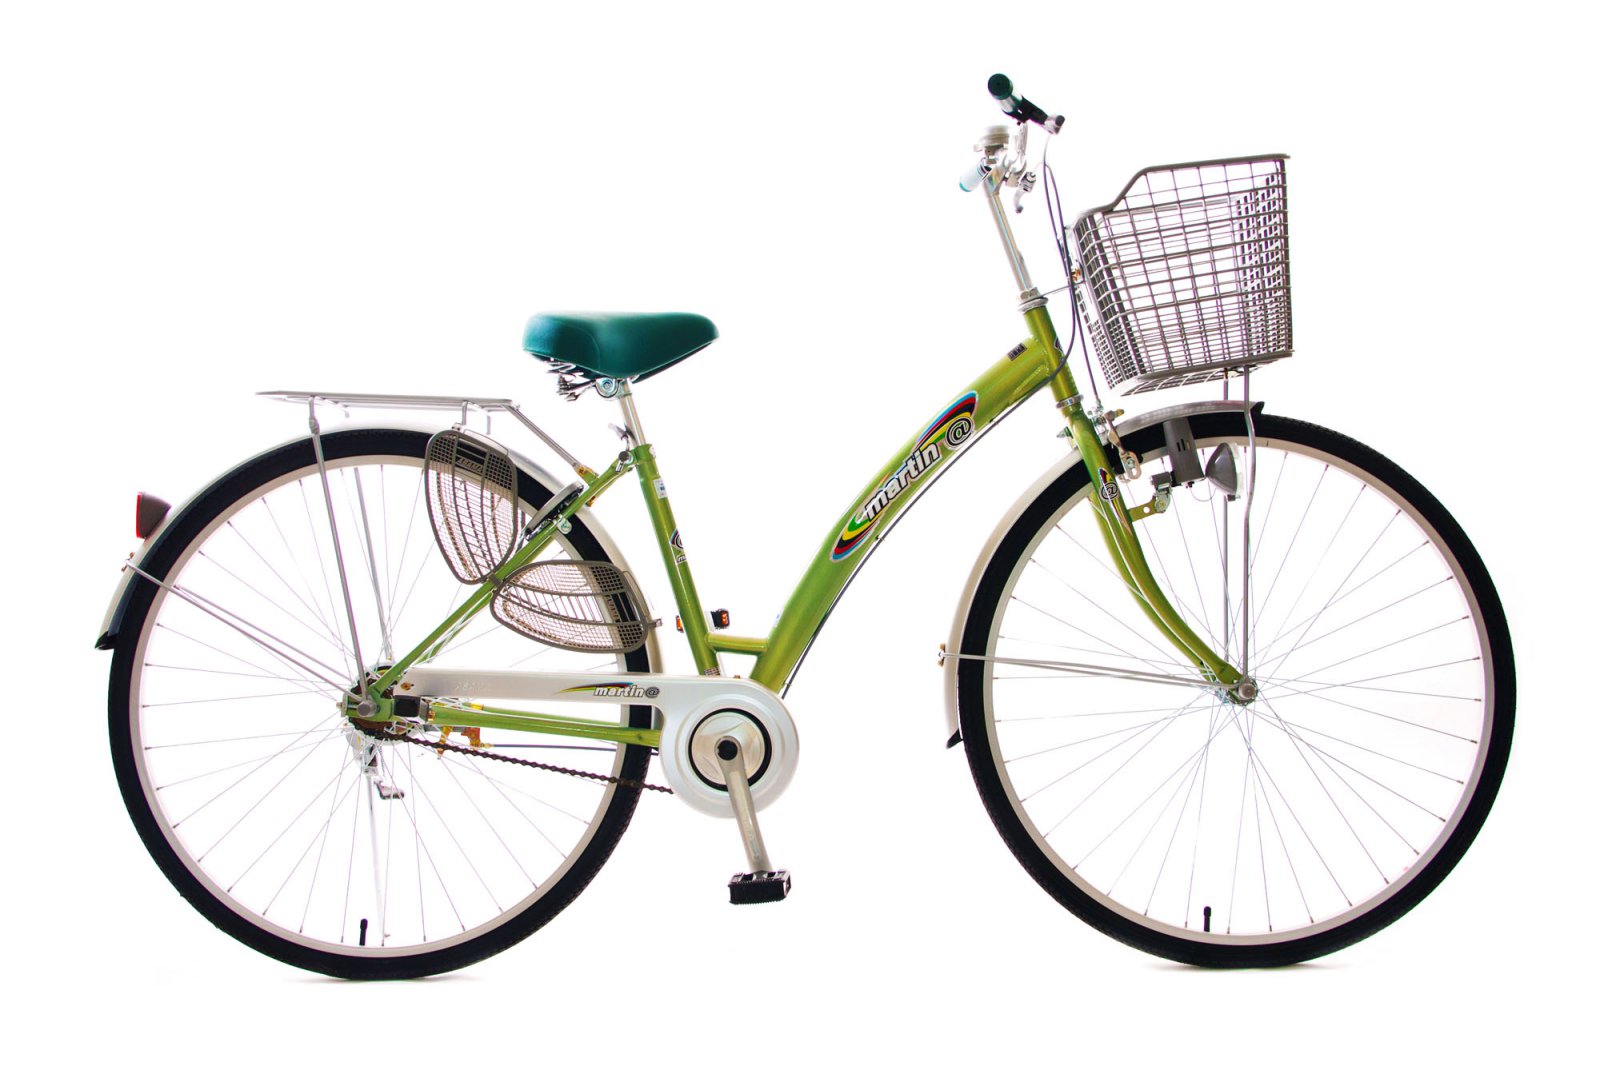 Xe đạp Martin 107